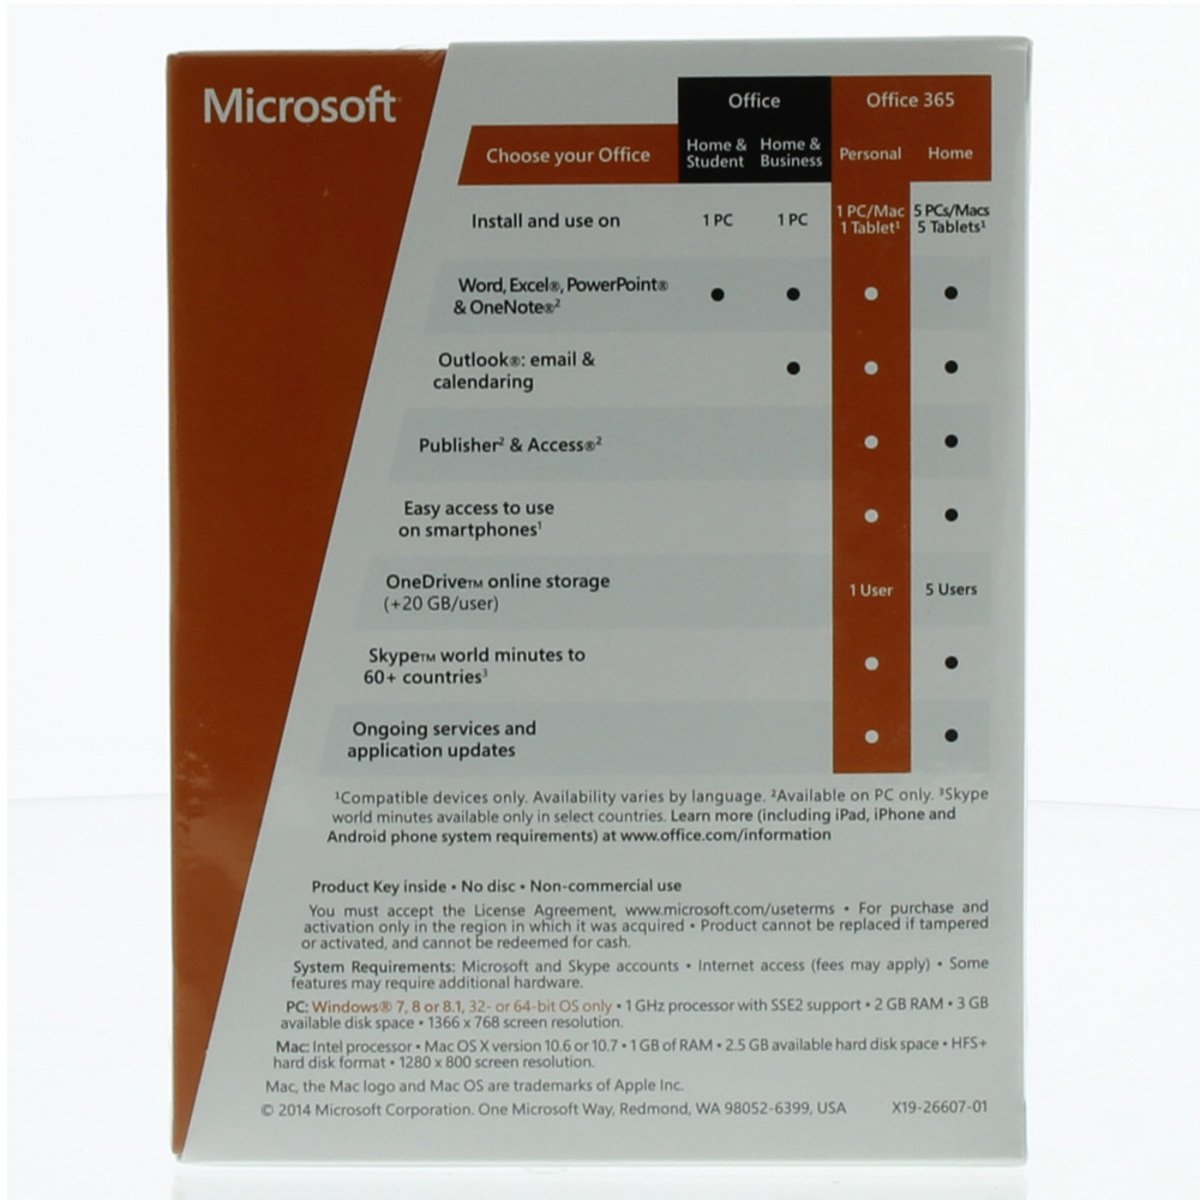 Microsoft Office 365 Personal